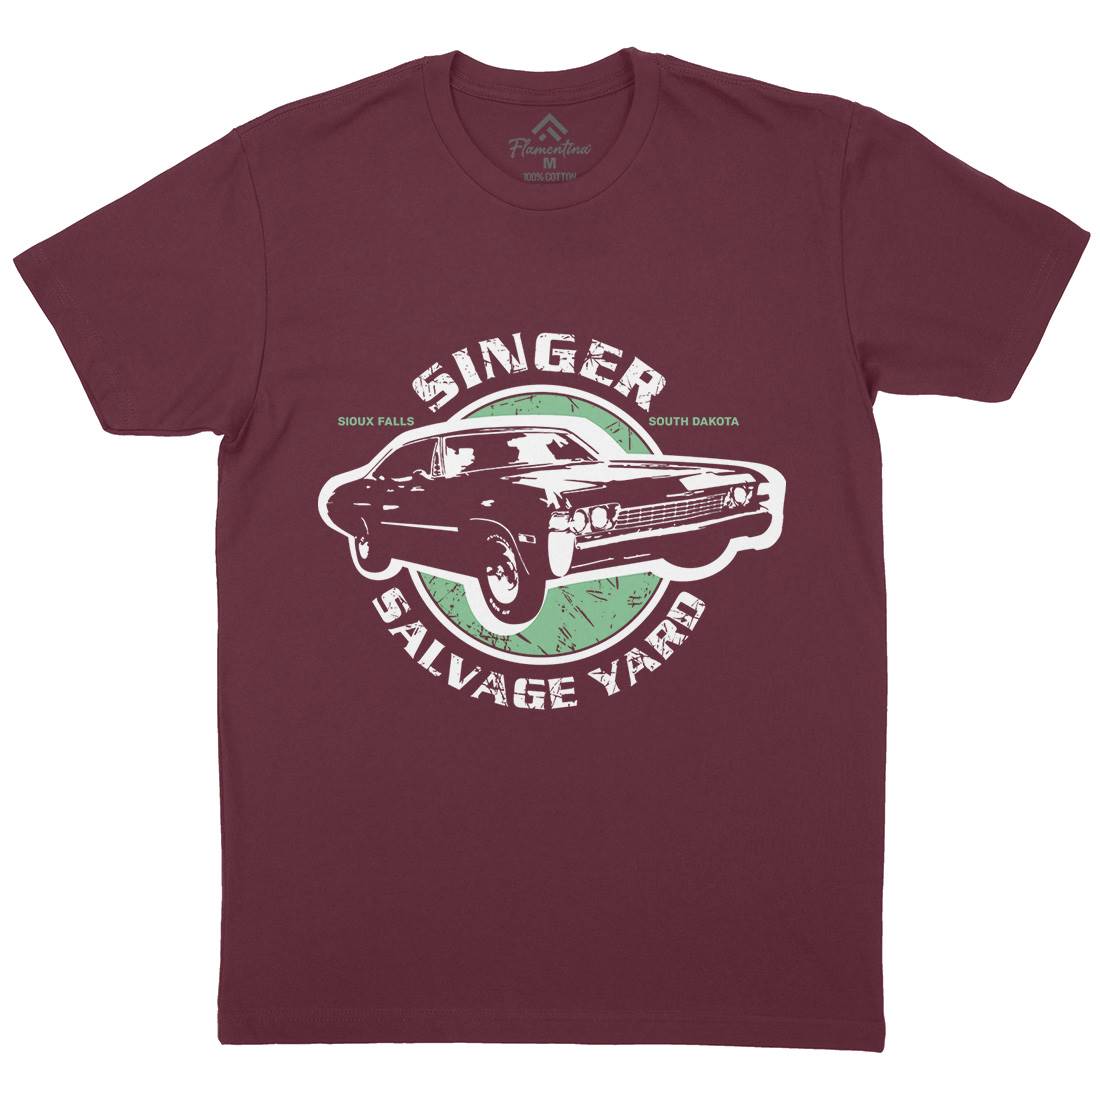 Singer Salvage Yard Mens Organic Crew Neck T-Shirt Cars D377